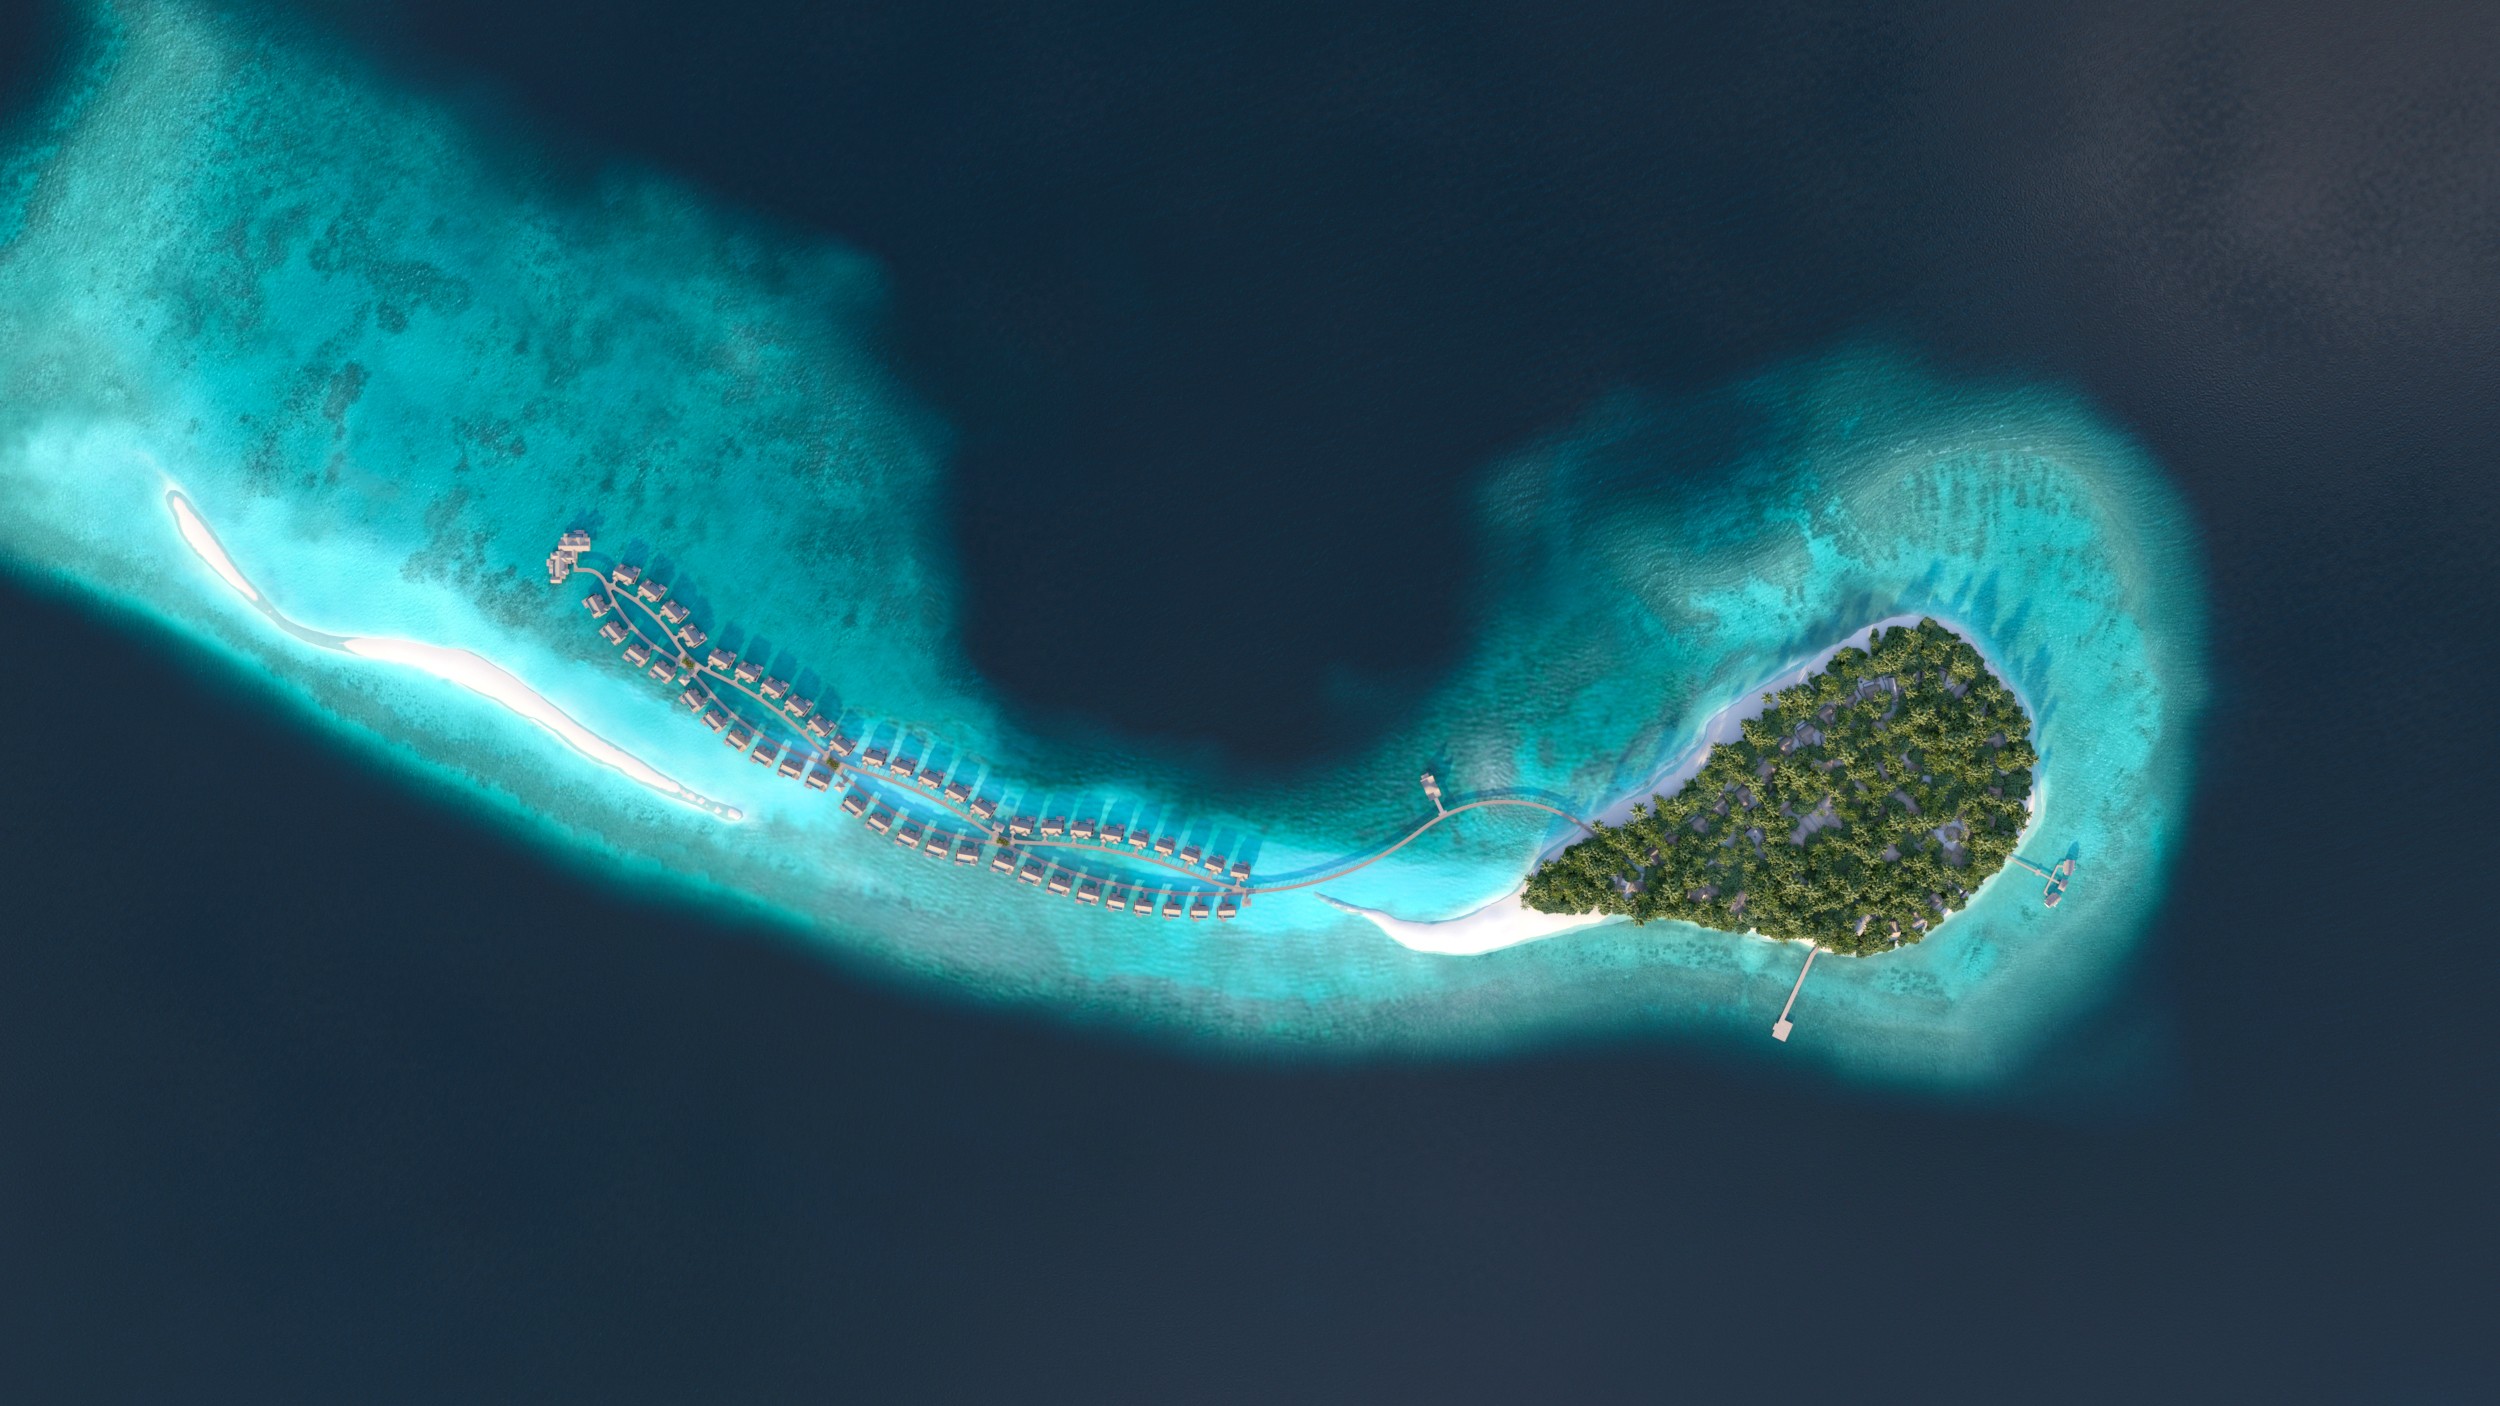 Joali island in the Maldives is a perfect getaway.